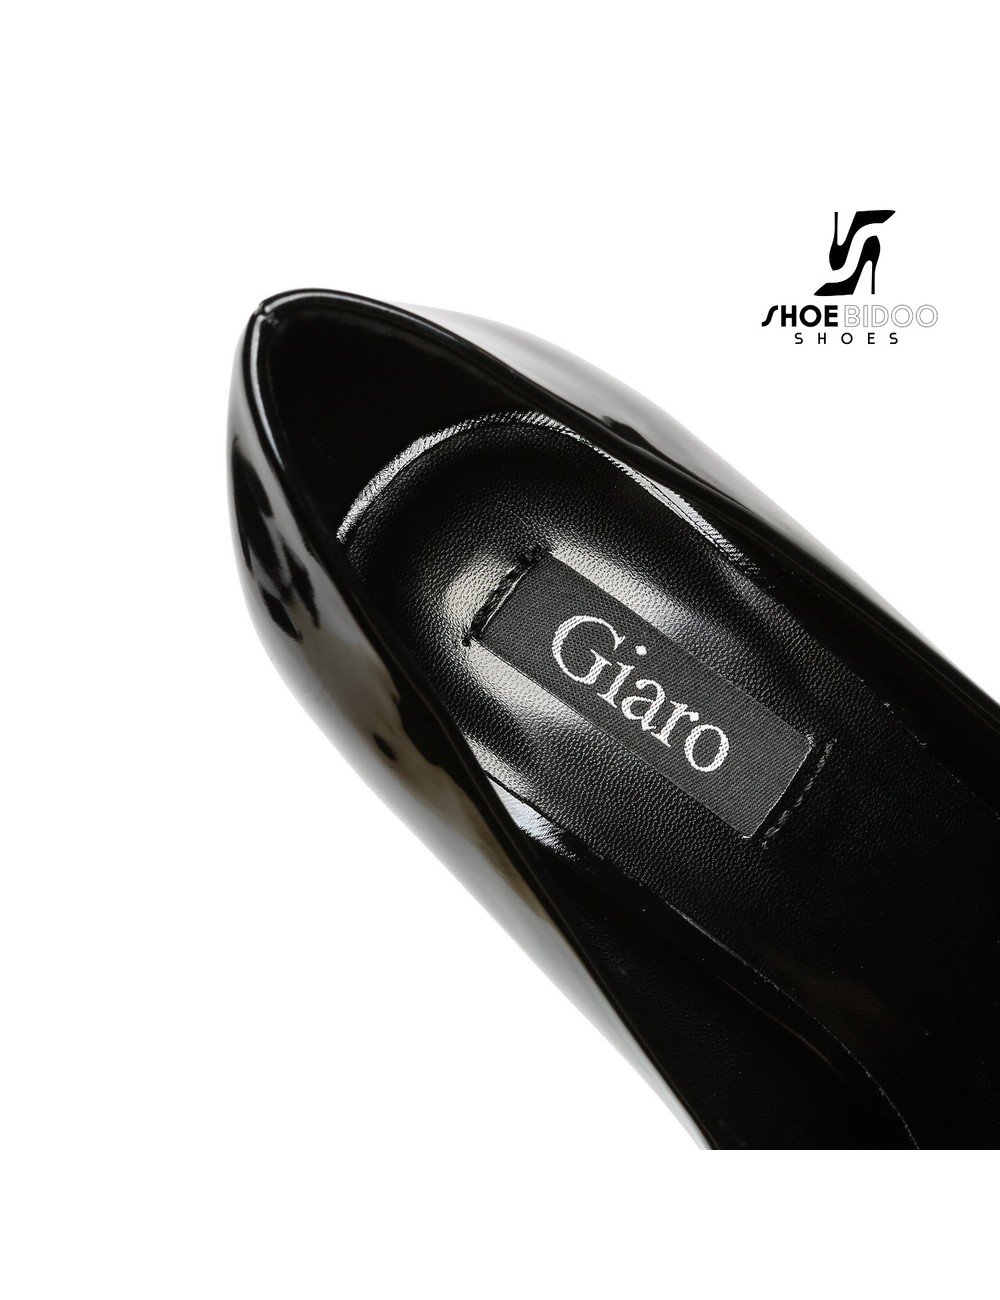 Giaro Giaro Platform pumps SCANT in black patent